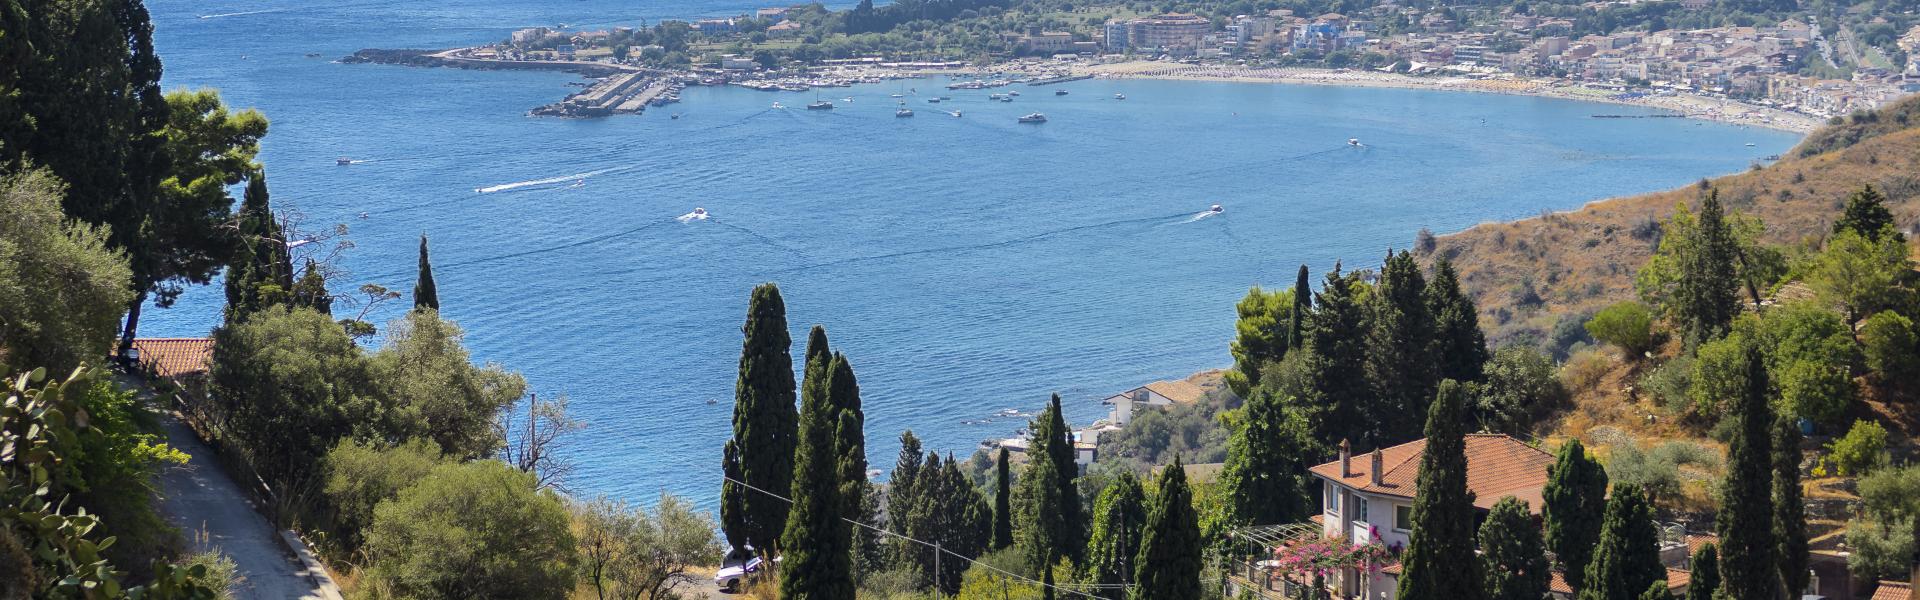 Naxos Scenic View